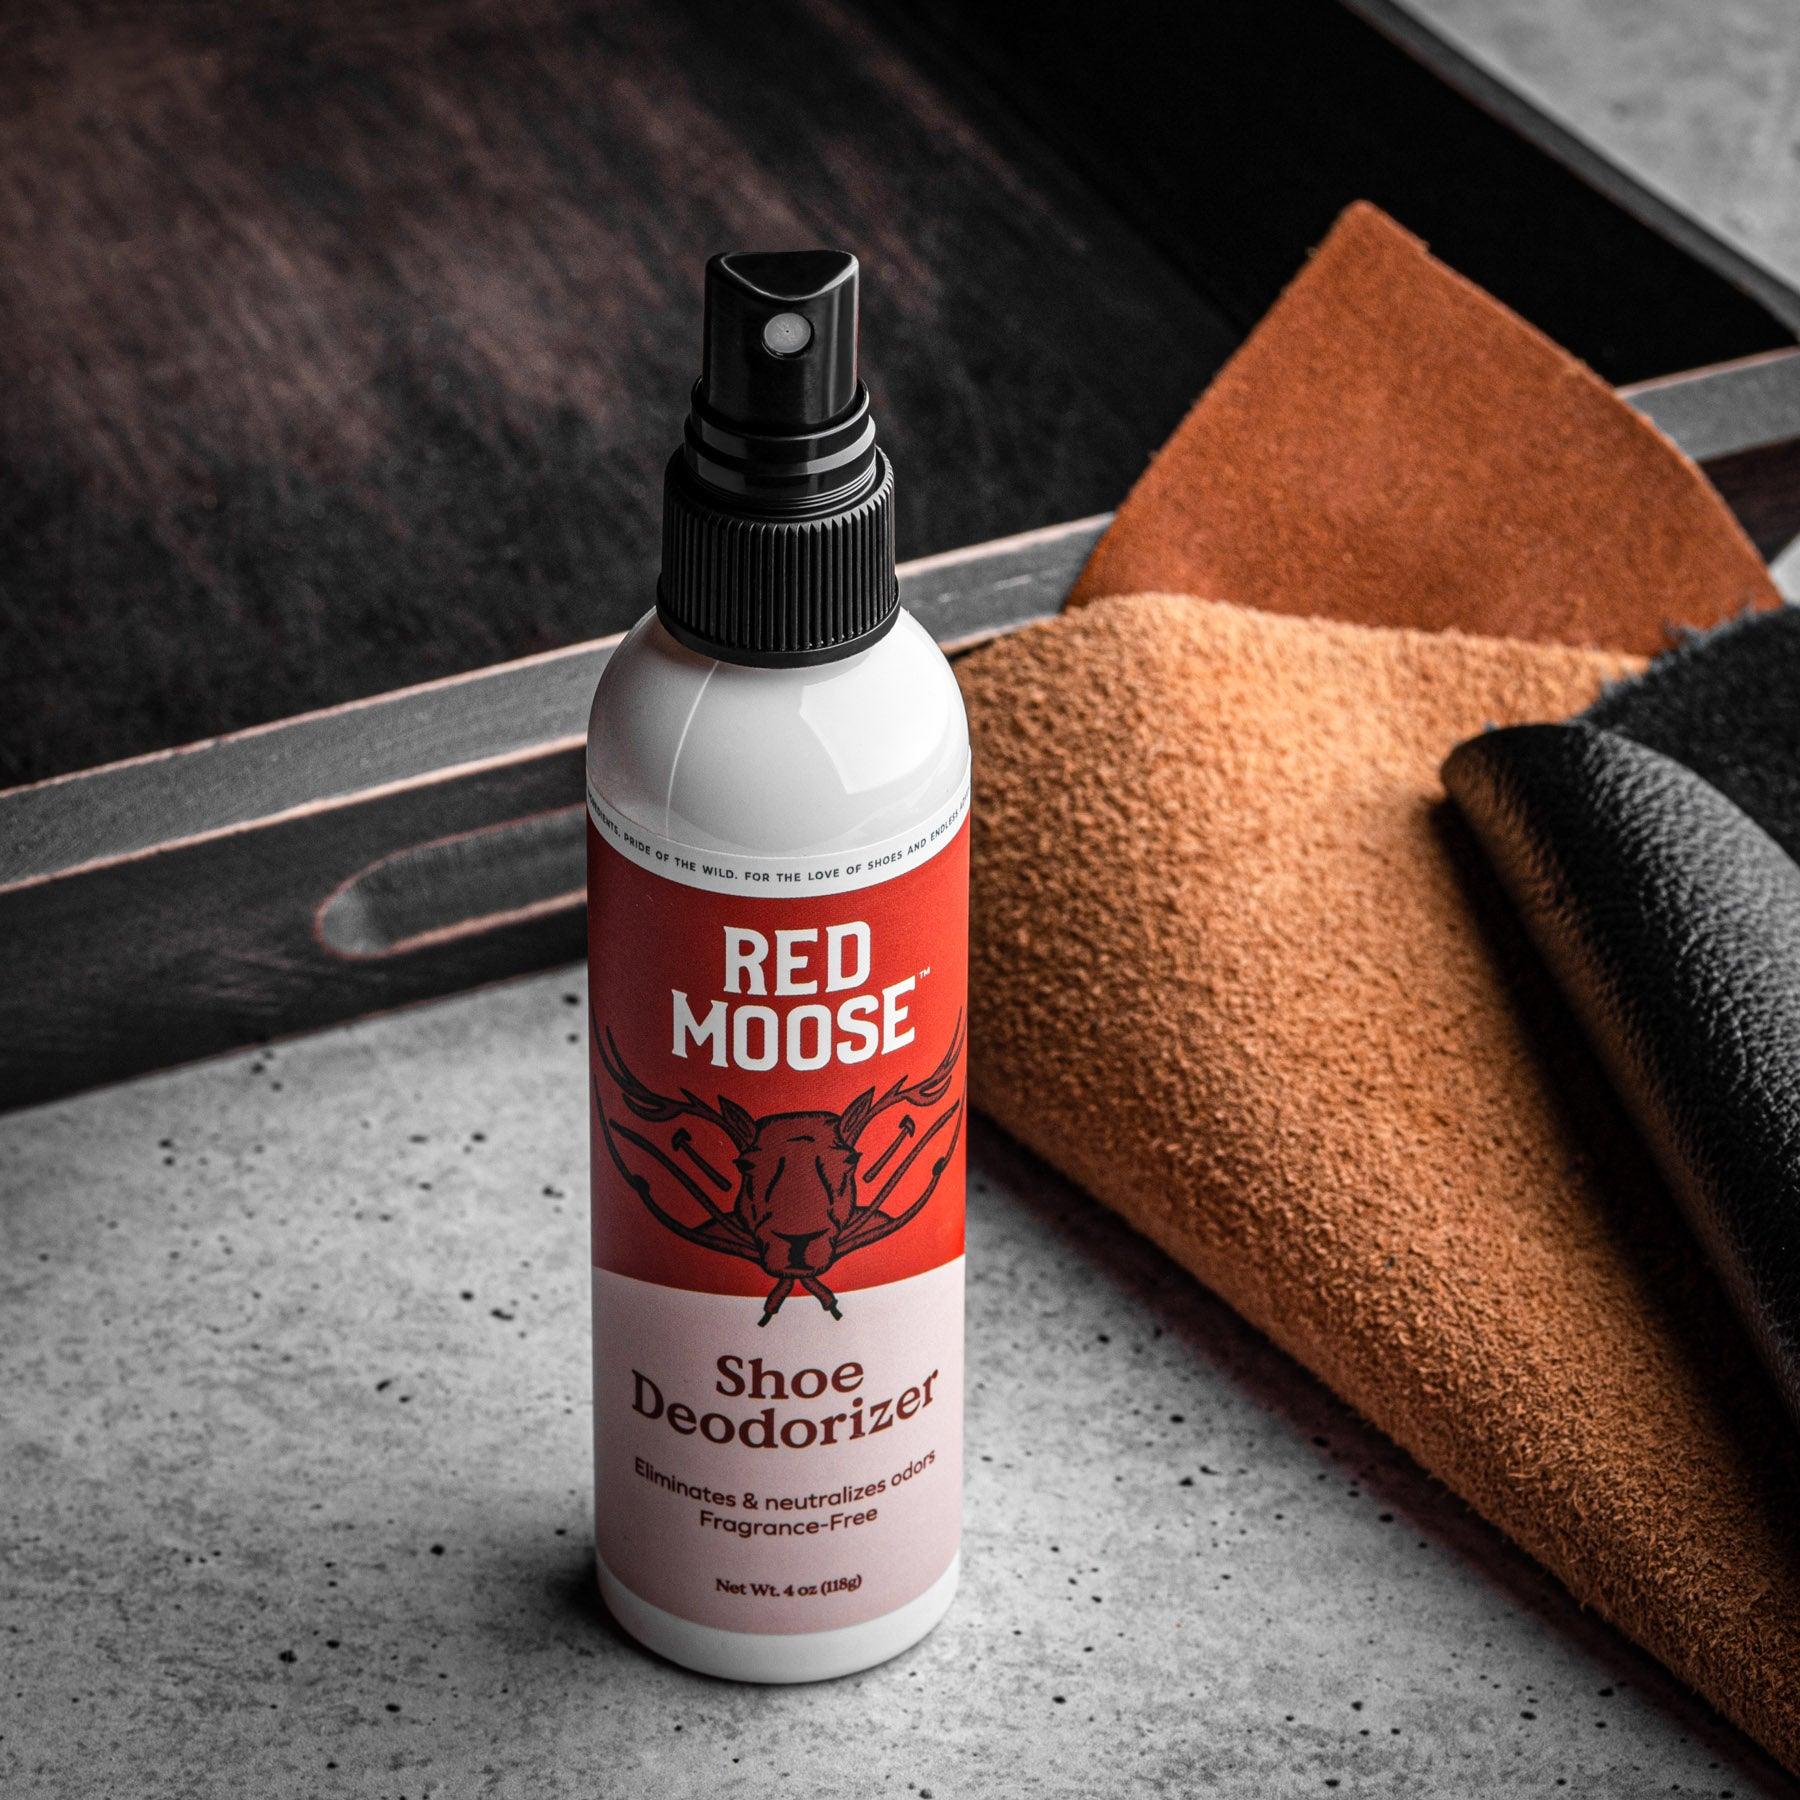 Red Moose | and Sneaker Deodorizer set